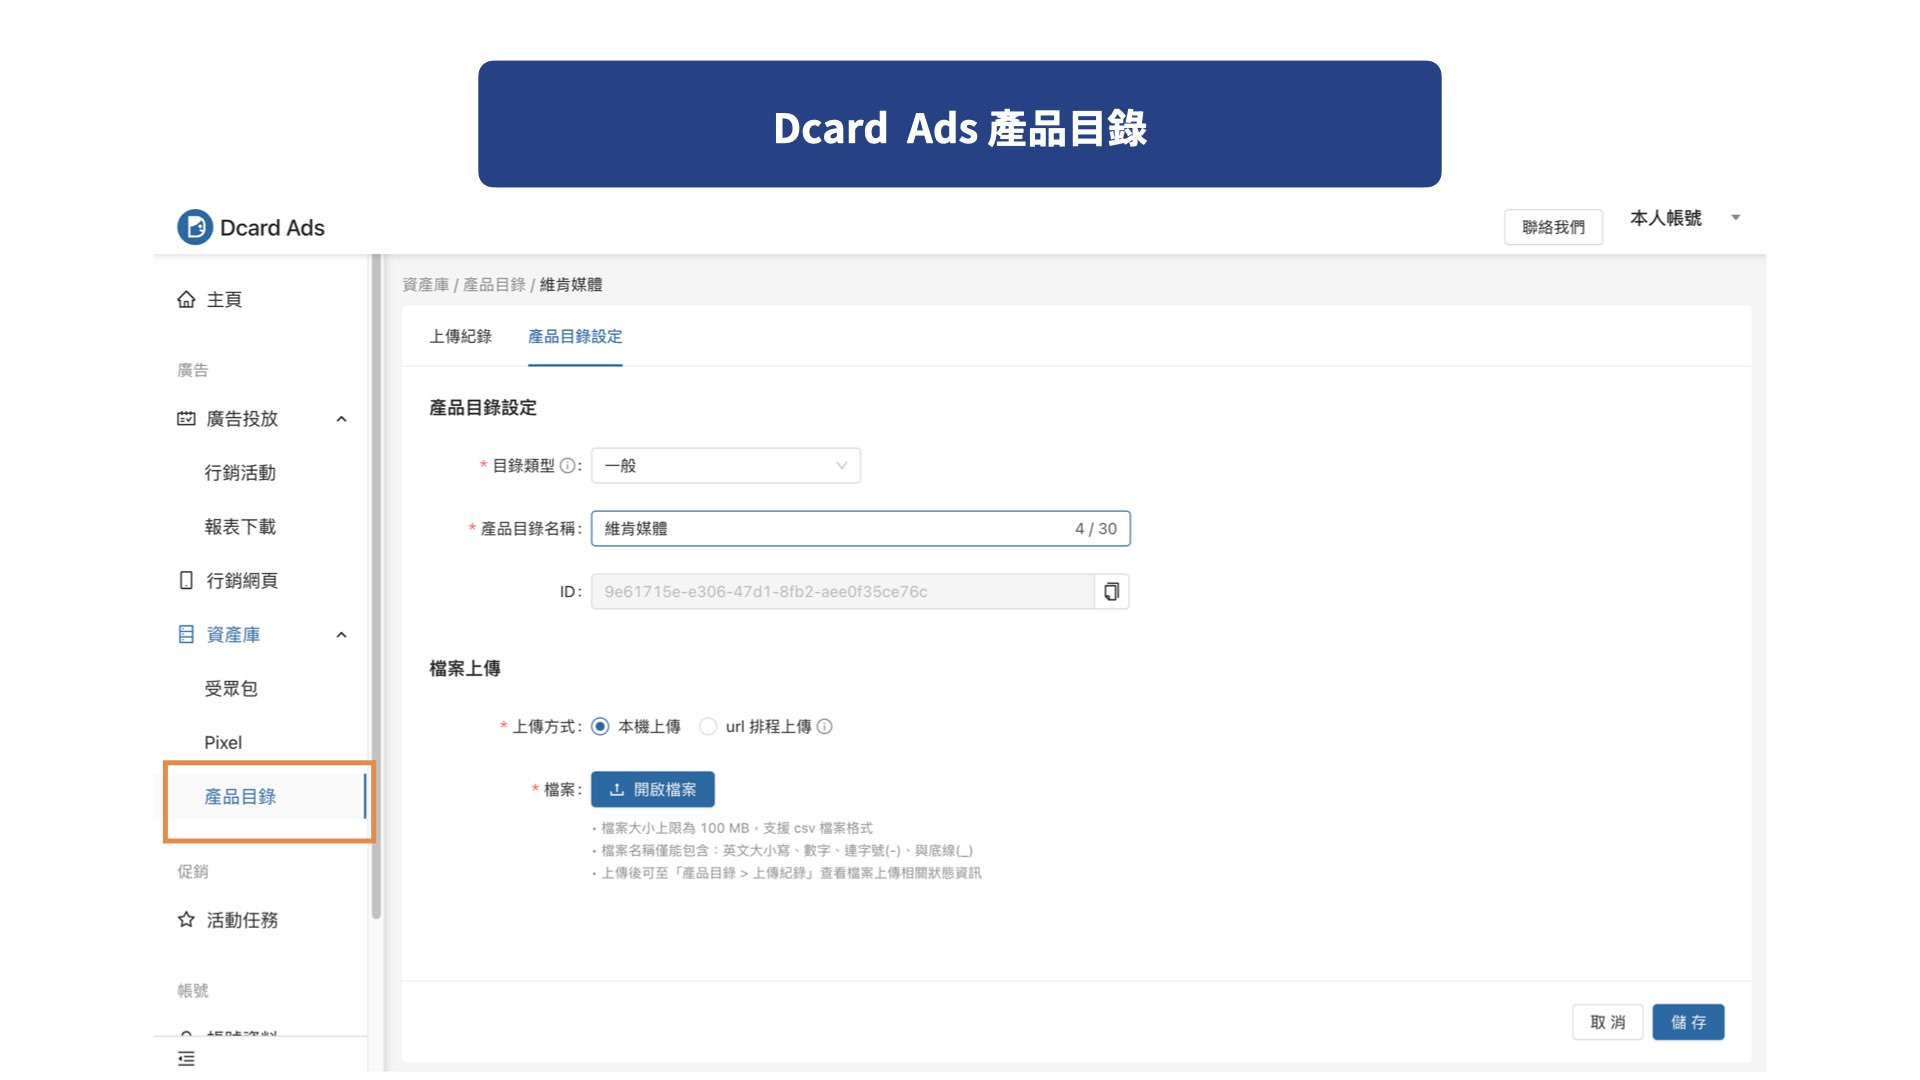 Dcard Ads 產品目錄